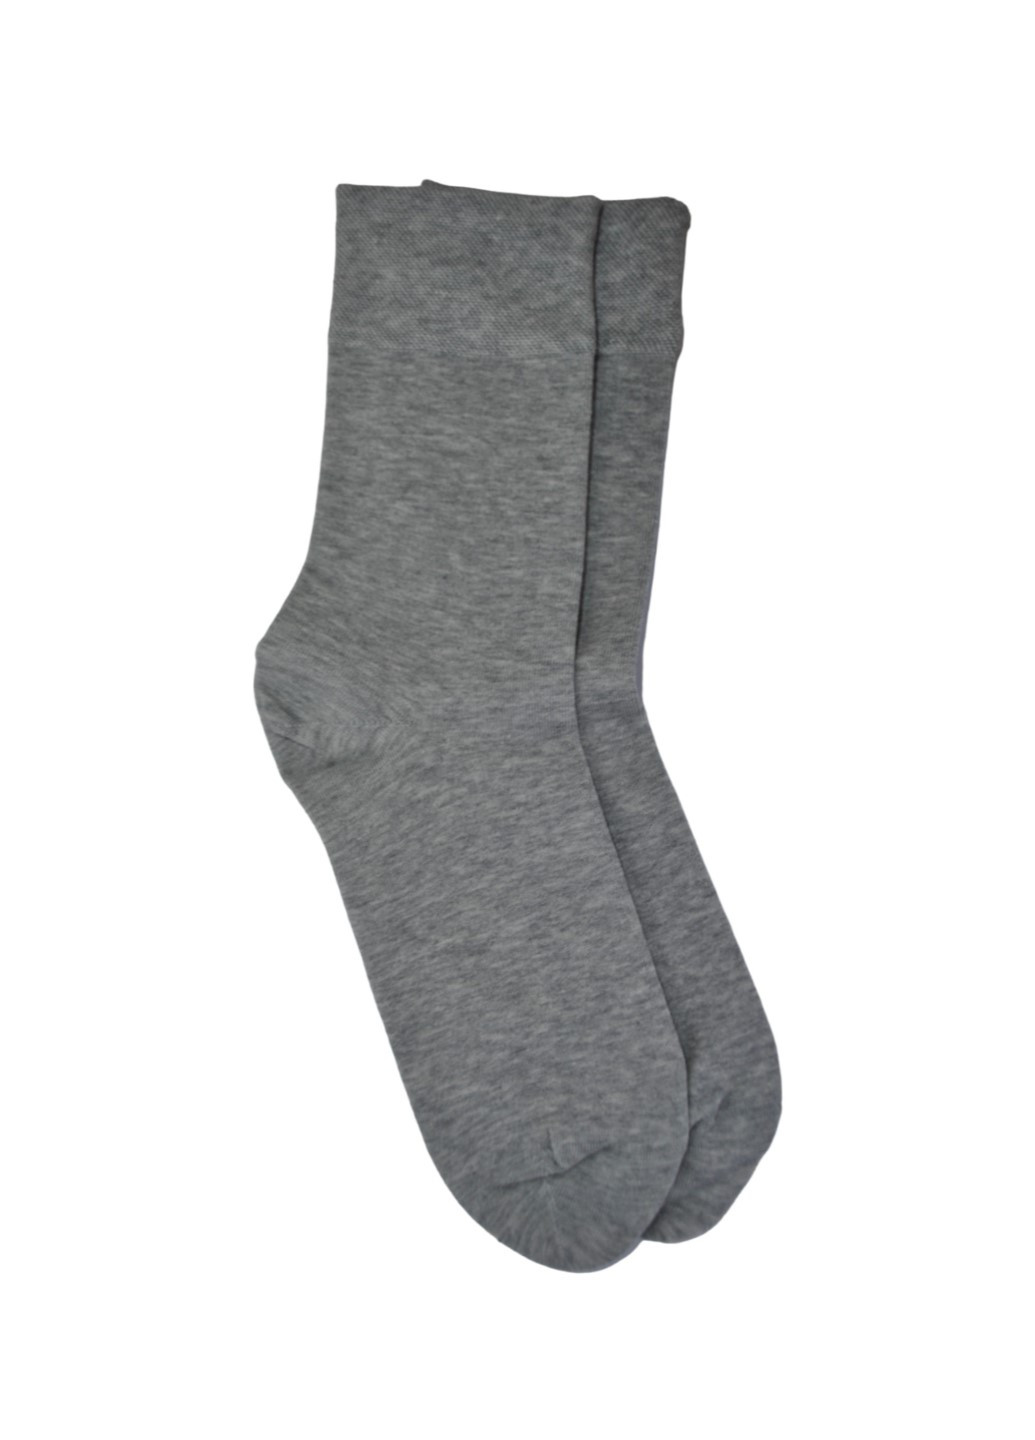 NTF Шкарпетки чол. (середньої довжини), р.39-42, light grey melange MZ ms3 classic (259643337)